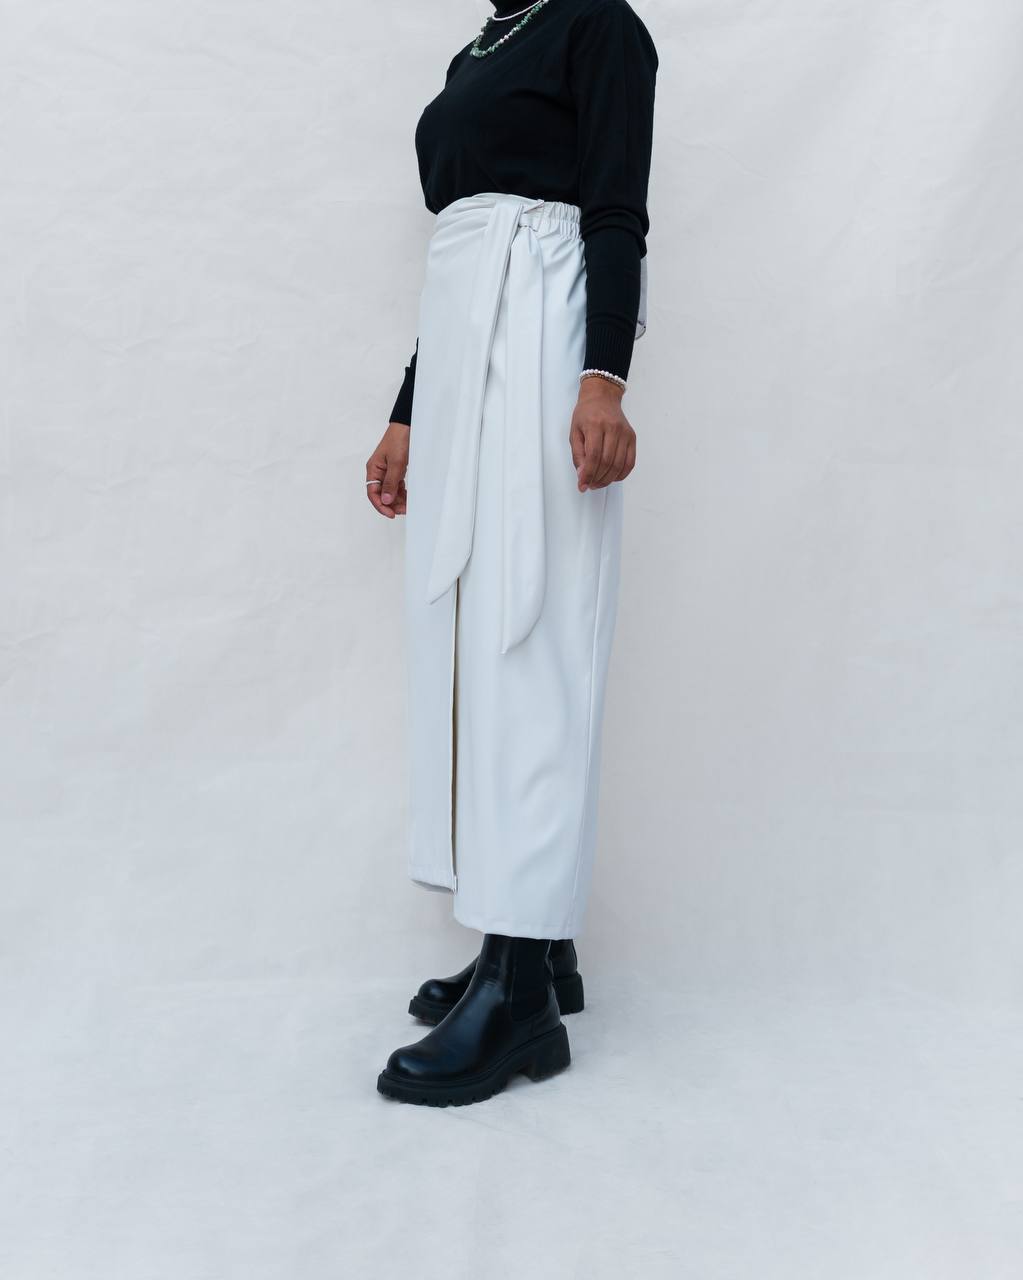 White Leather Skirt 3